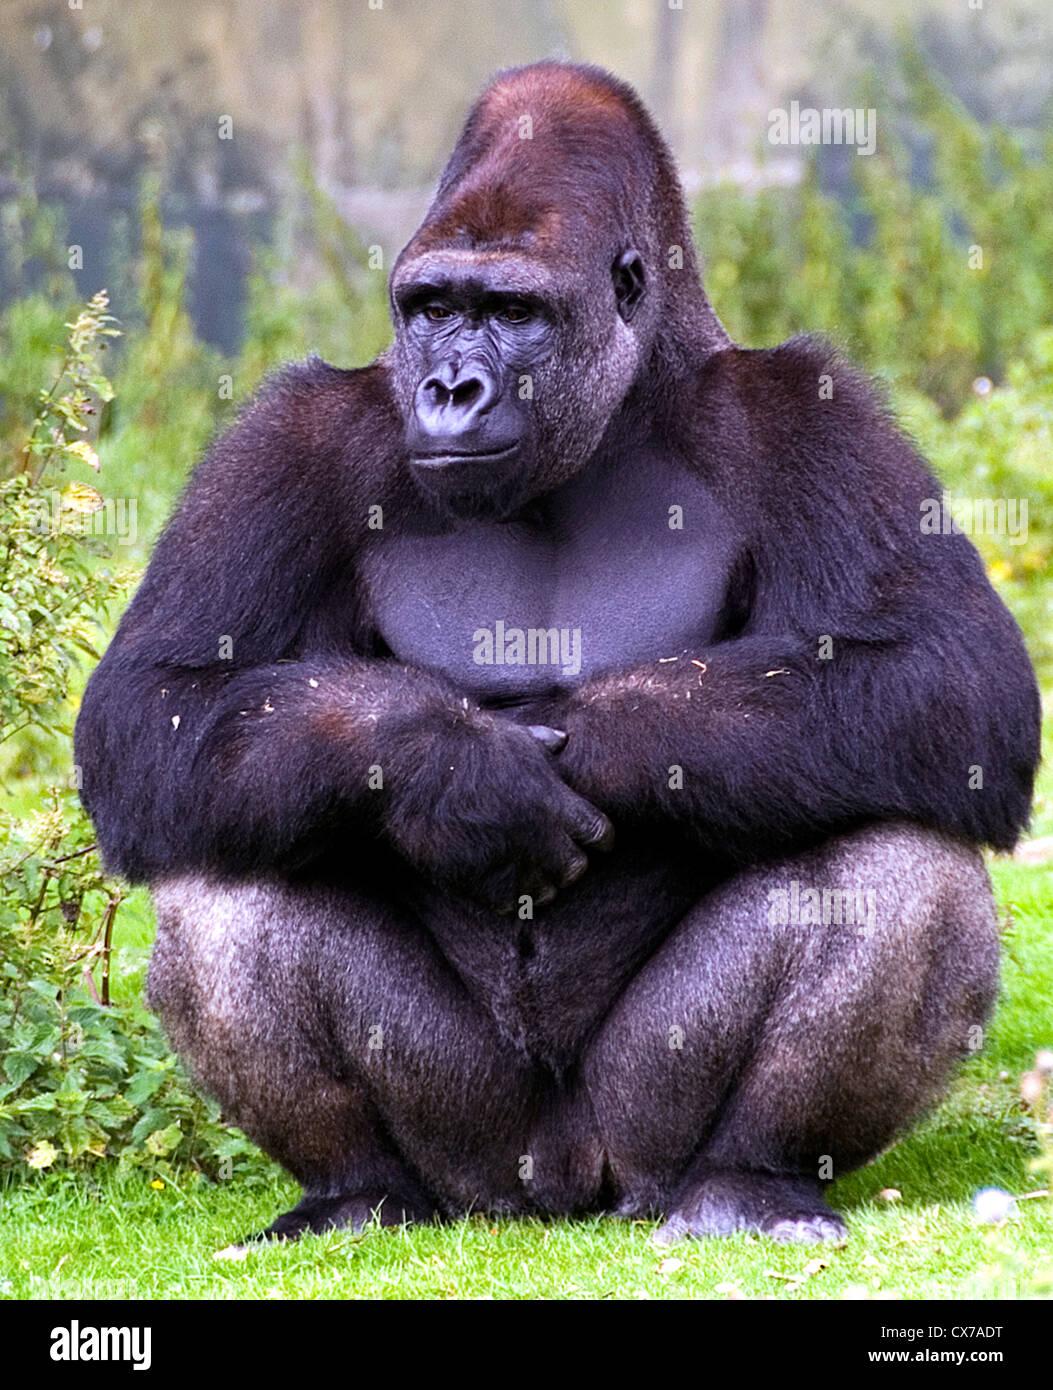 Male gorilla sitting contemplating life Stock Photo